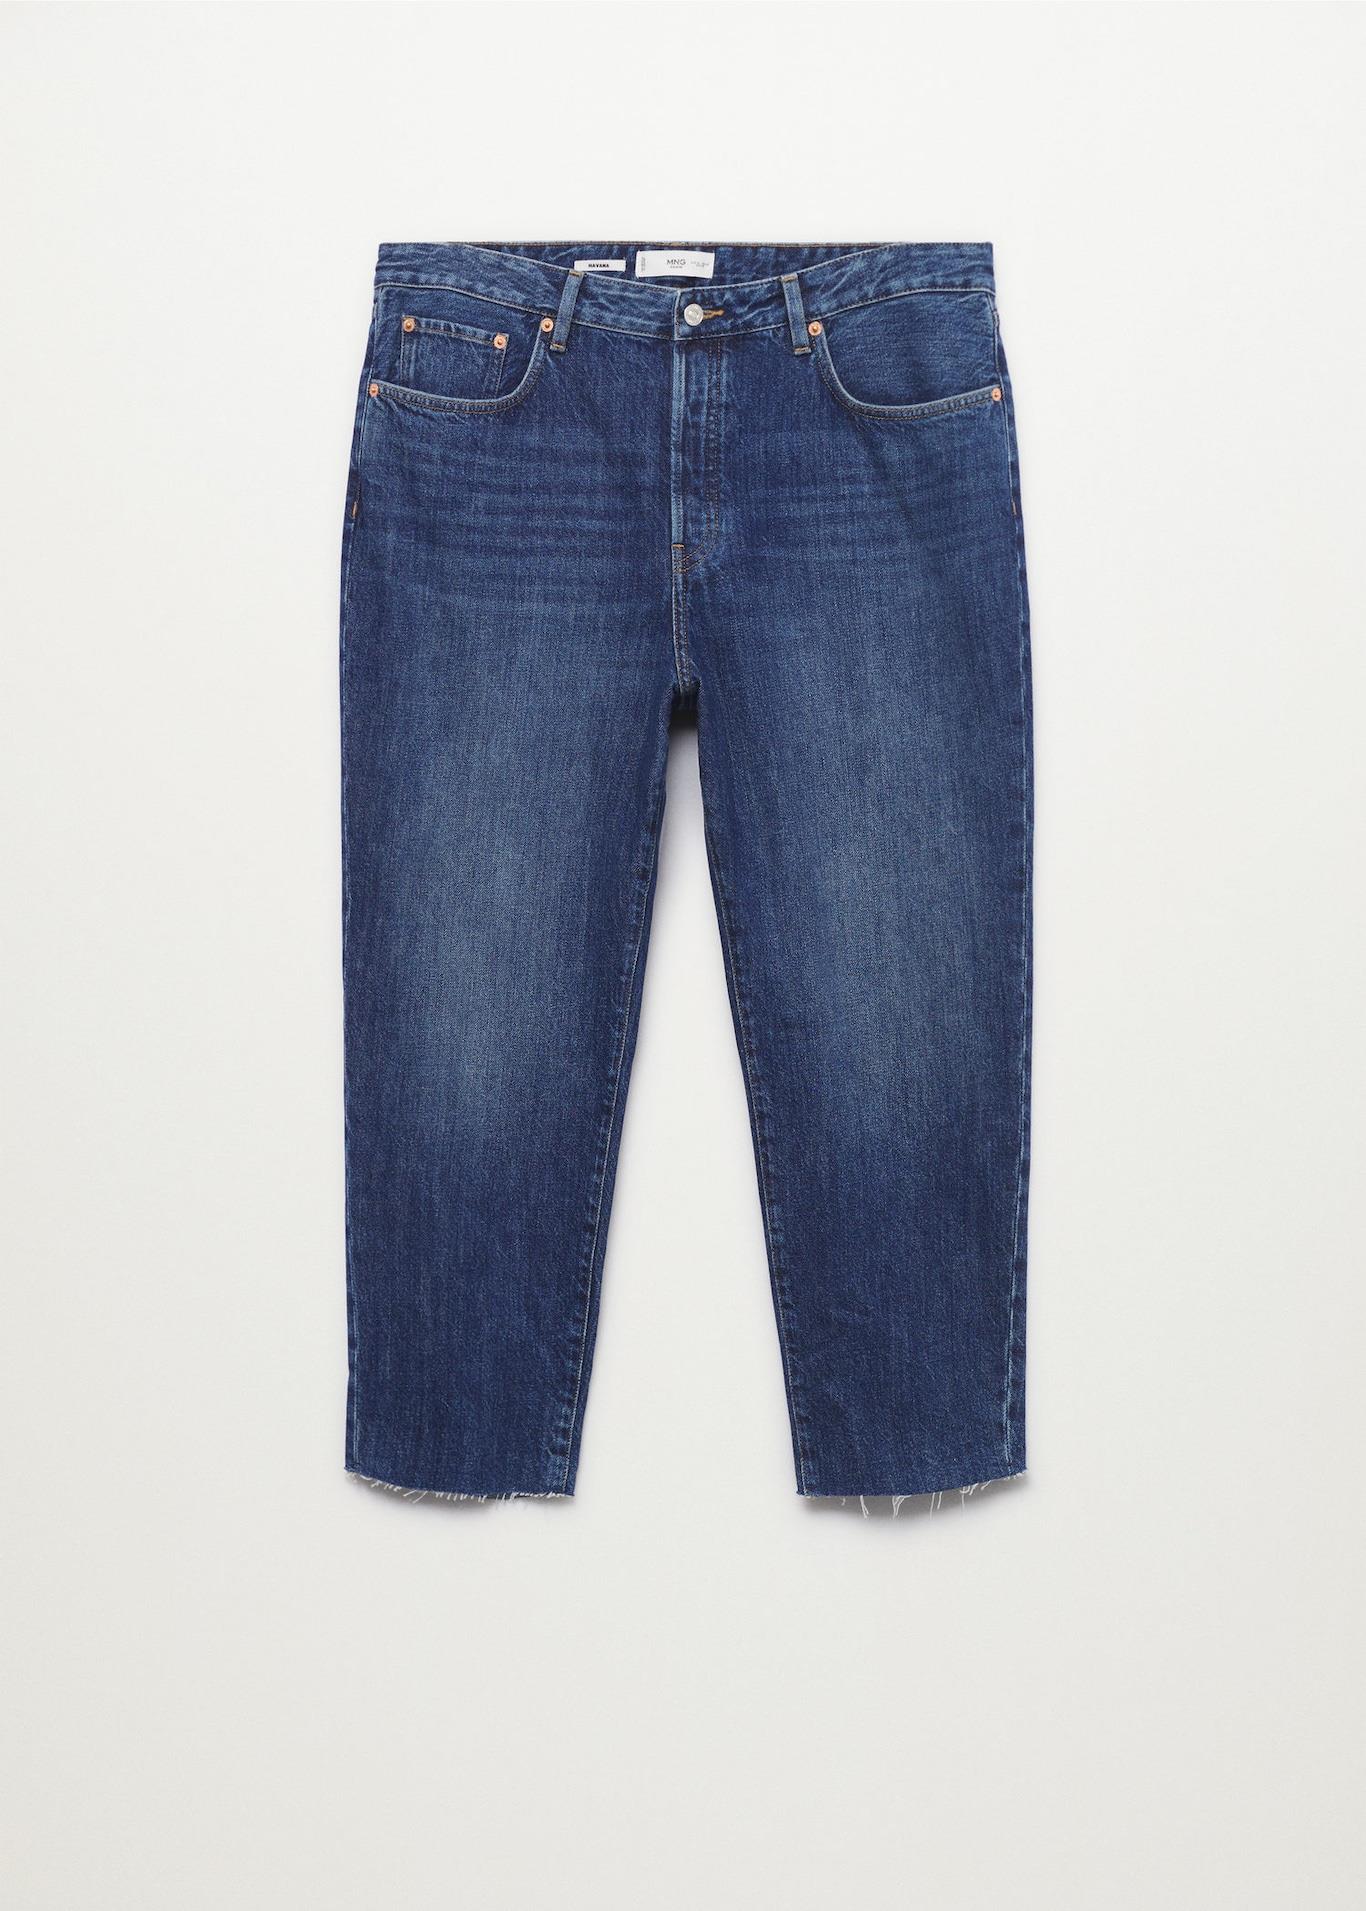 Jeans de mujer 'culotte', de Zara